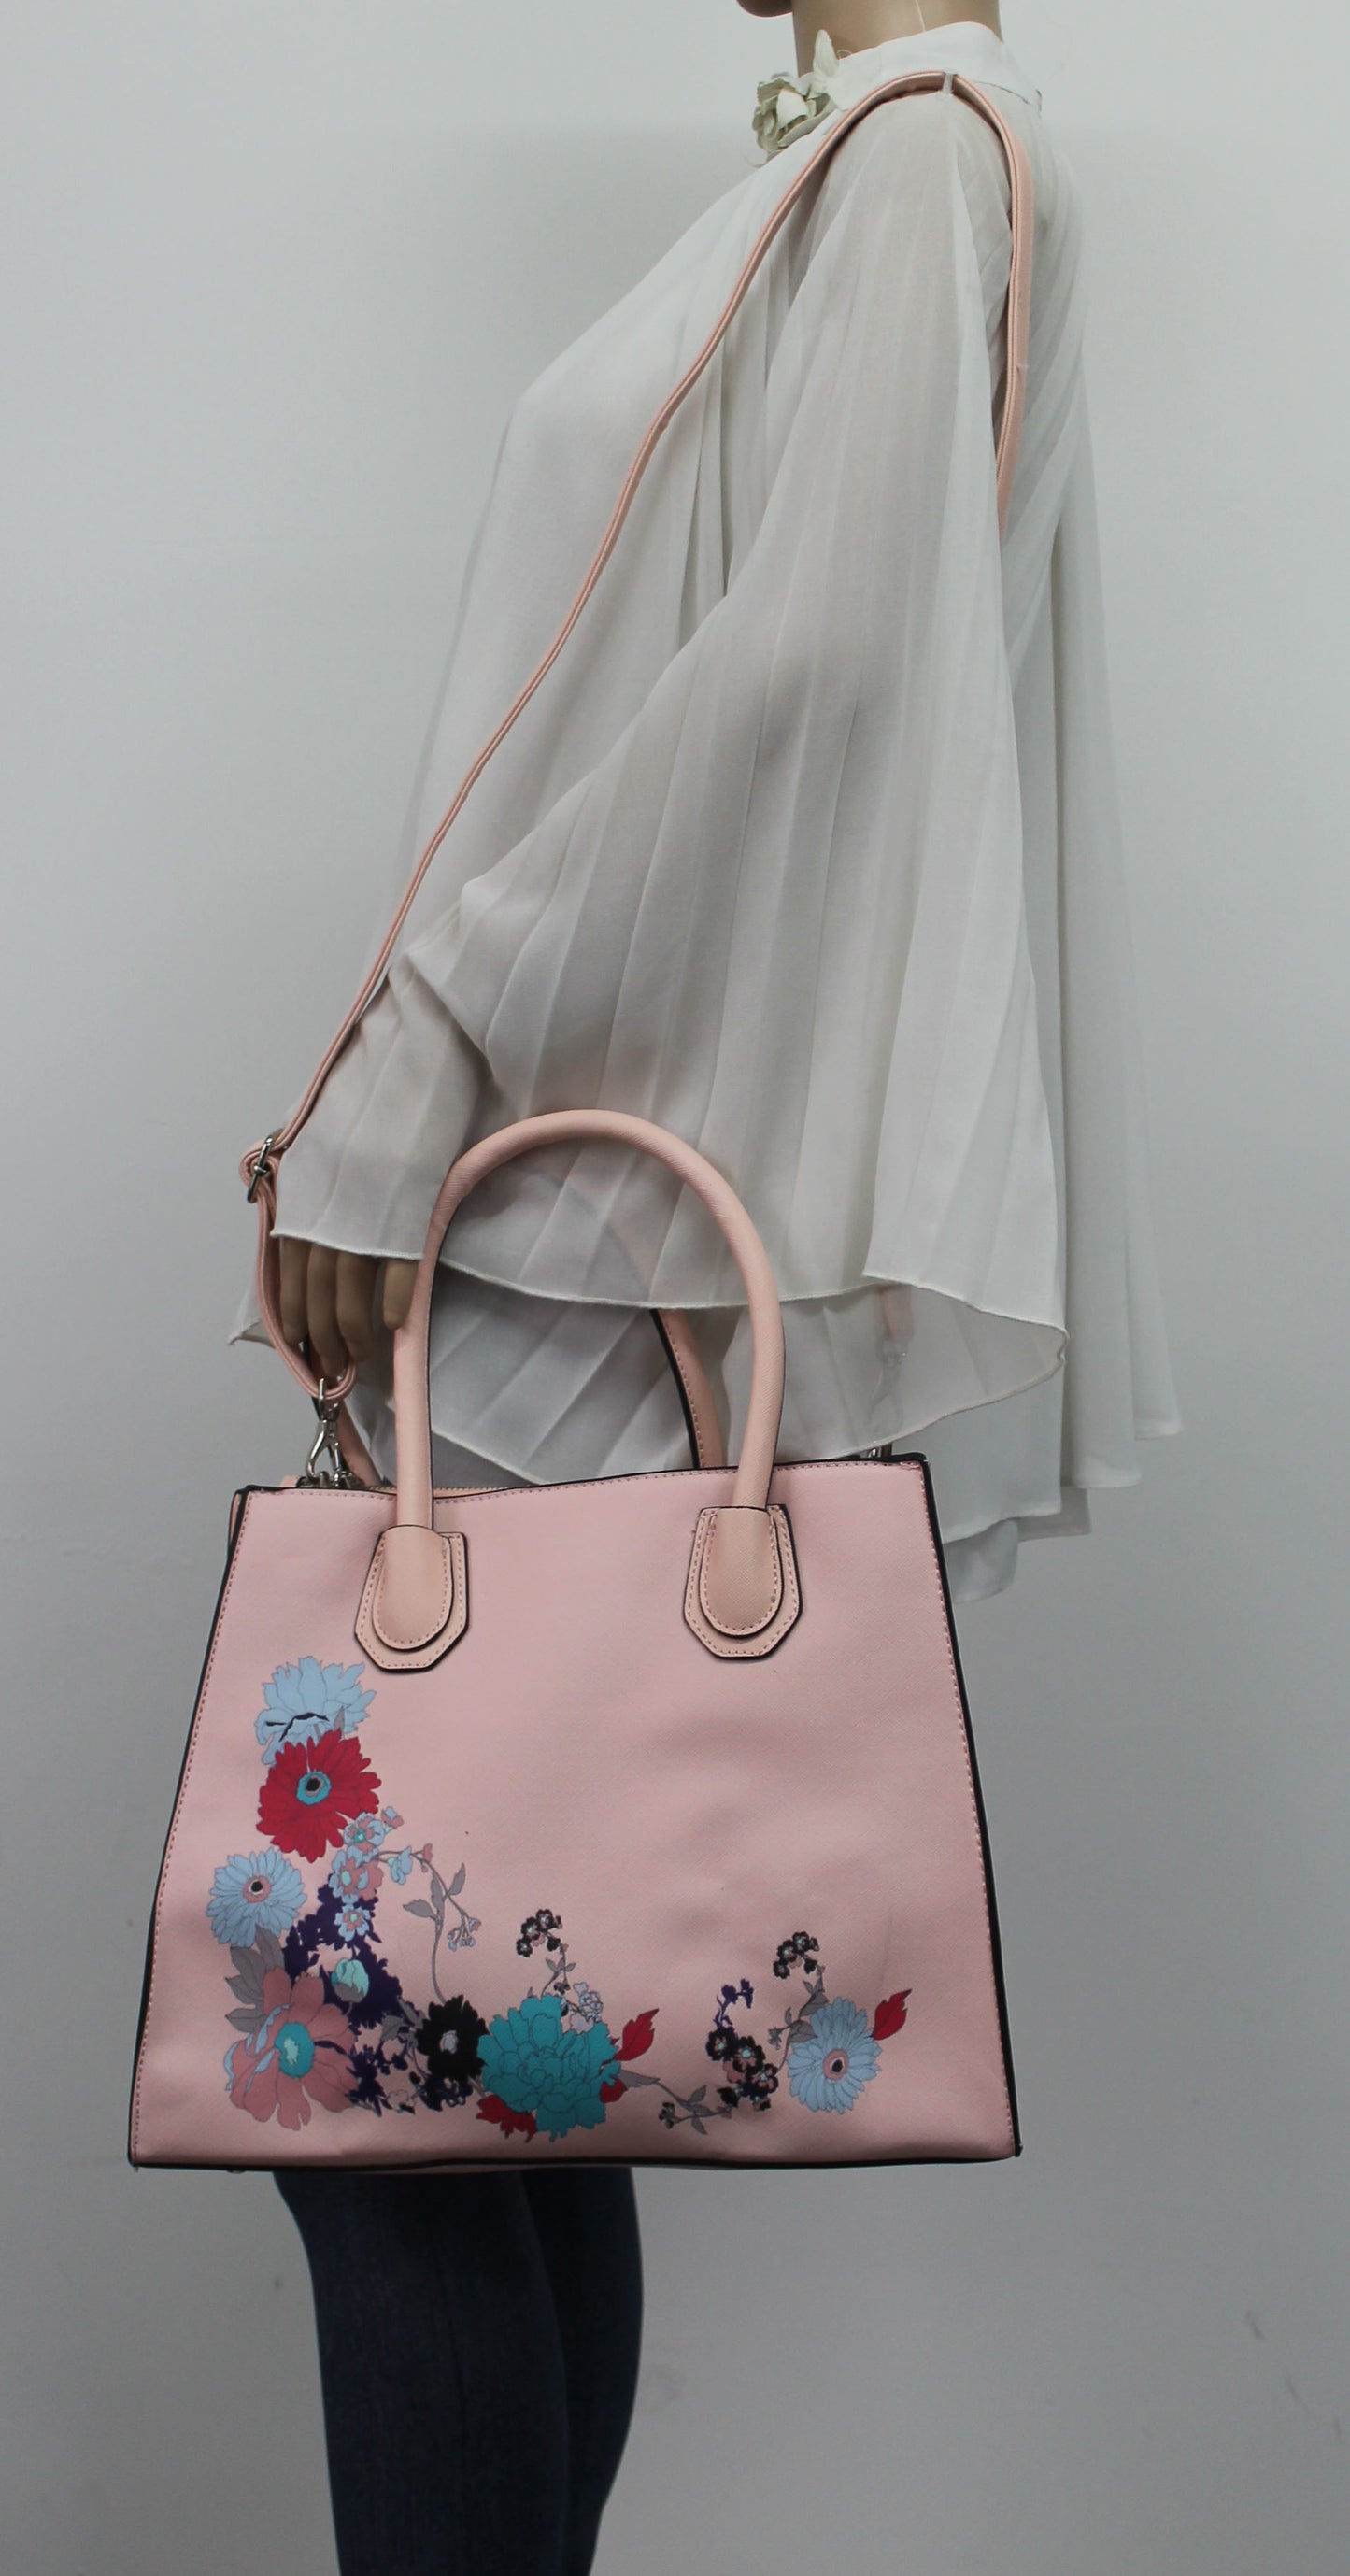 Hanna Floral Handbag Pale PinkBeautiful Cute Animal Faux Leather Clutch Bag Handles Strap Summer School